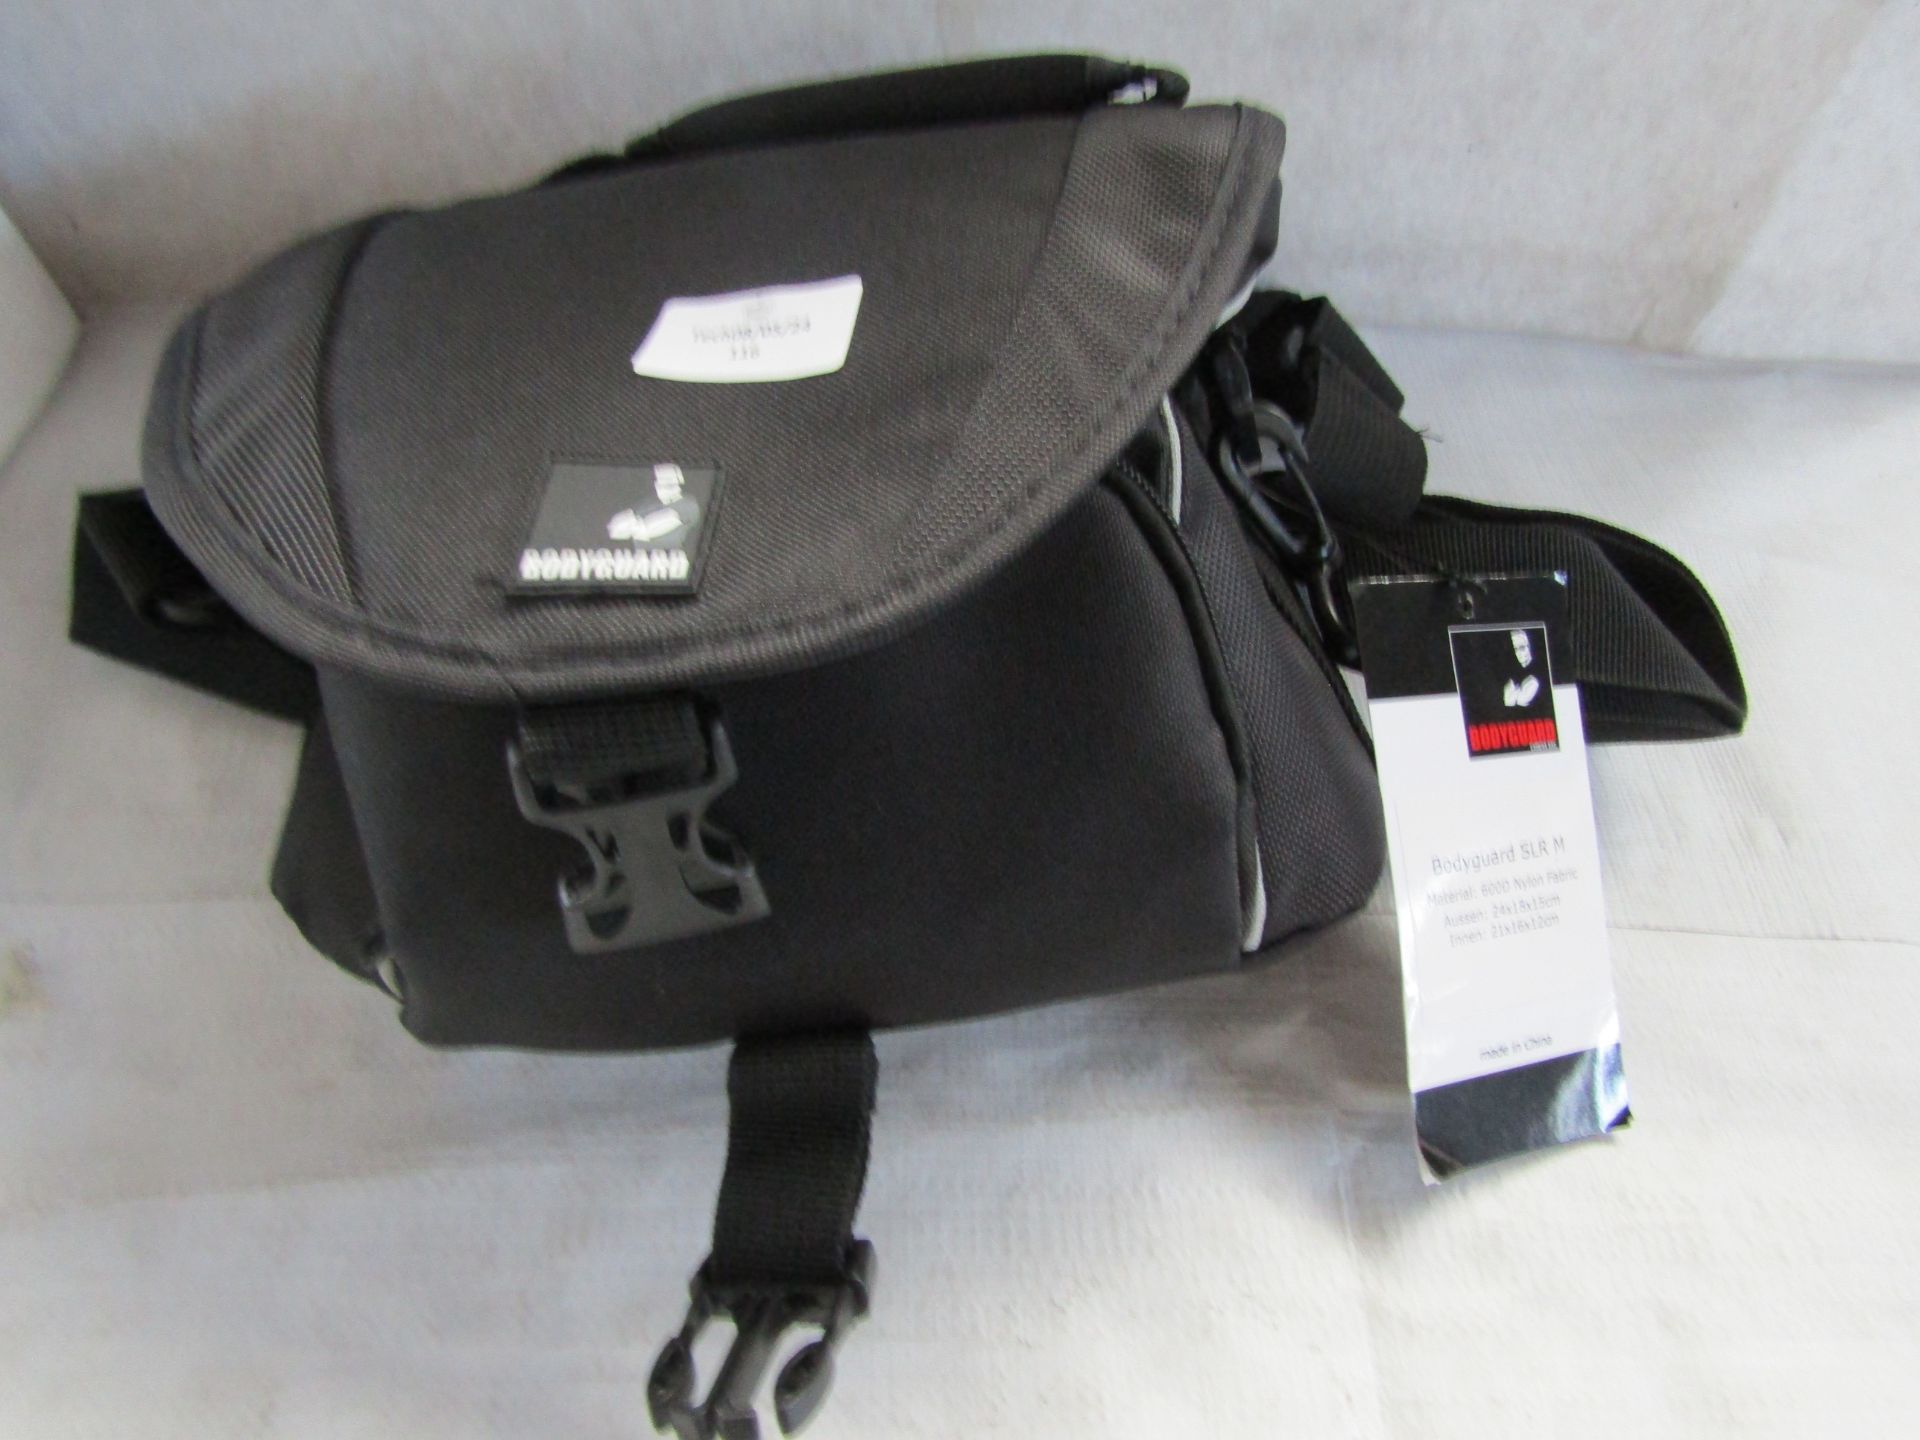 Bodyguard Nylon fabric Camera Bag - Unused With Tag.